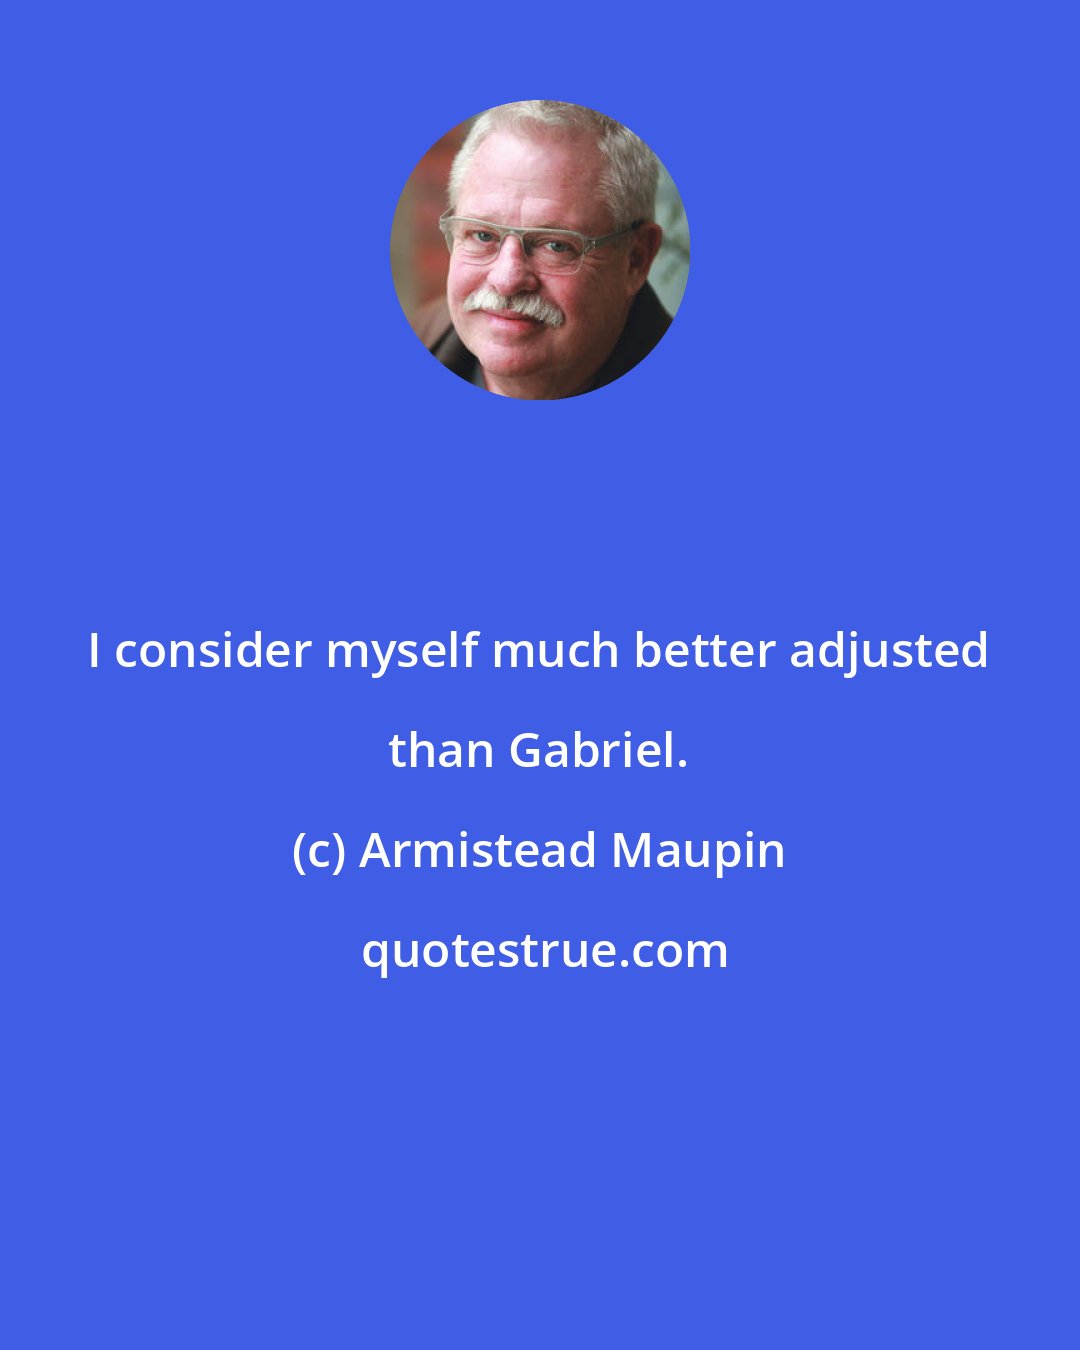 Armistead Maupin: I consider myself much better adjusted than Gabriel.